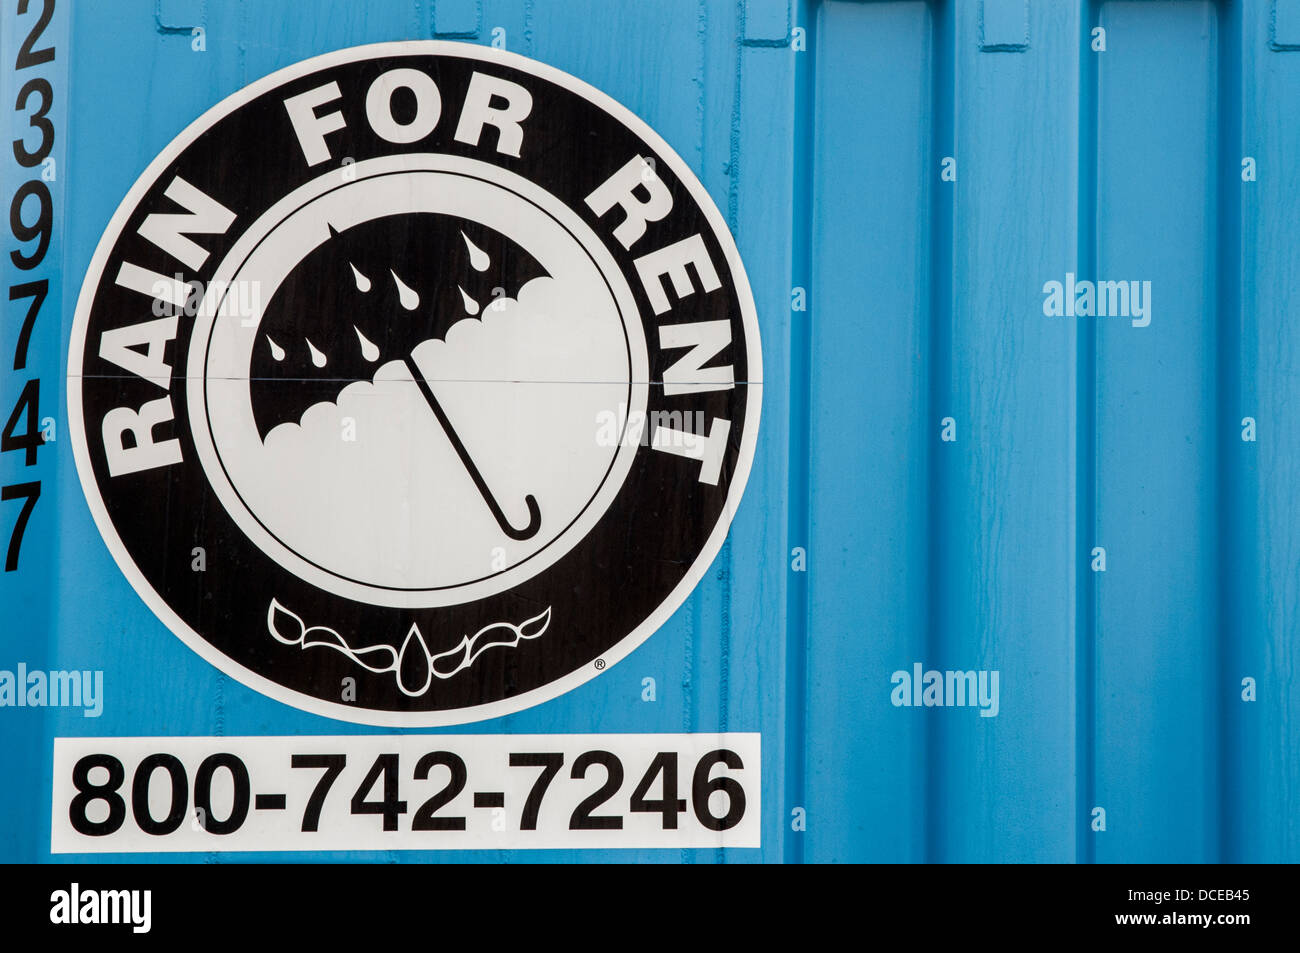 USA, Louisiana, Atchafalaya Basin, Morgan City. Sign on container advertising 'Rain for Rent'. Stock Photo